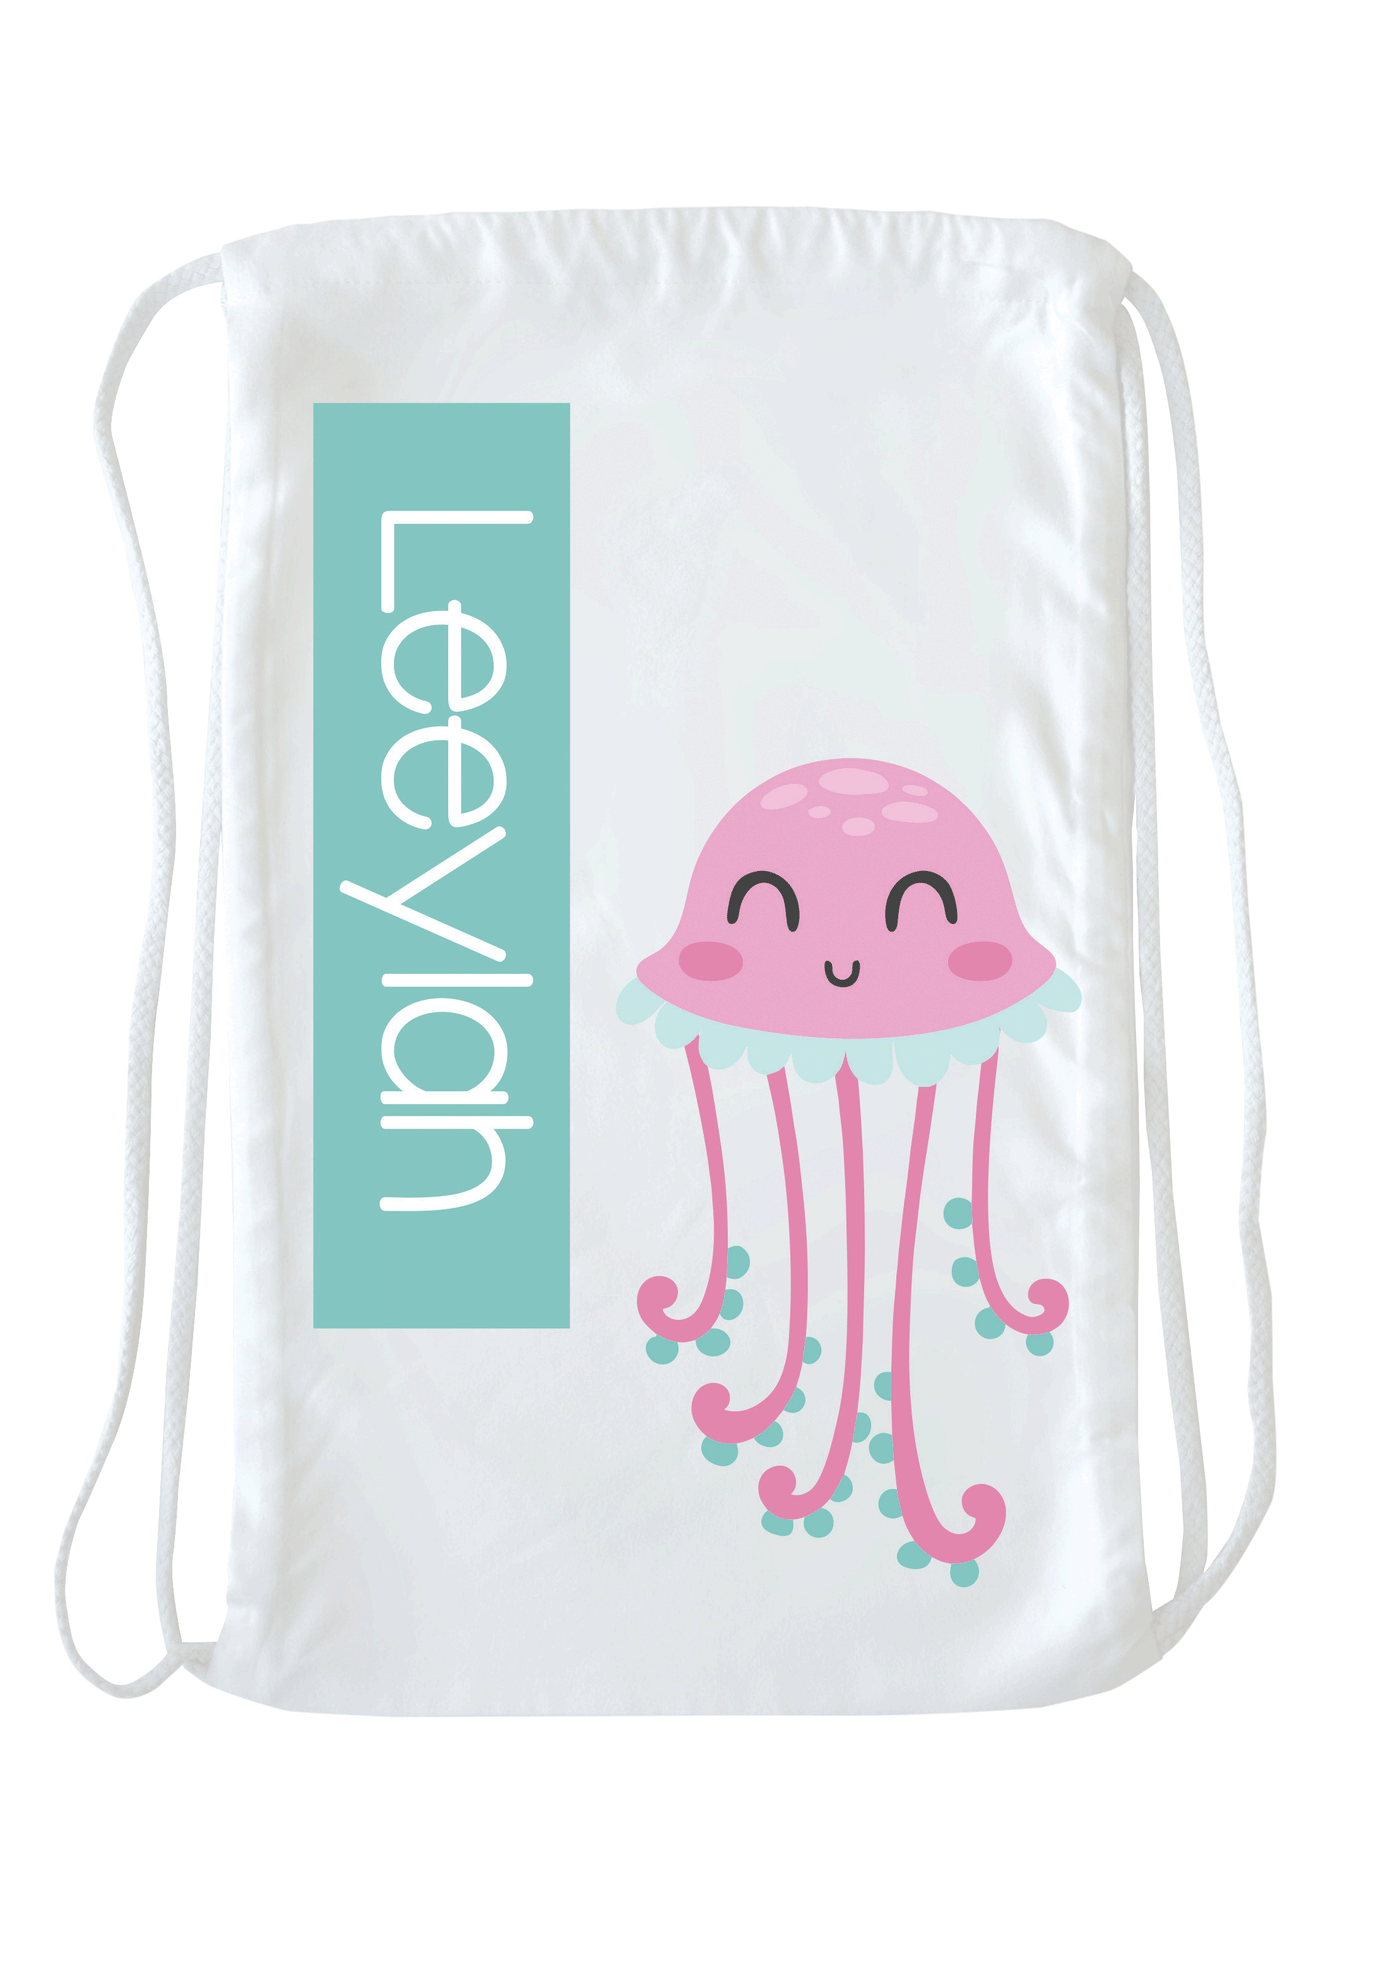 Jelly Fish Bag